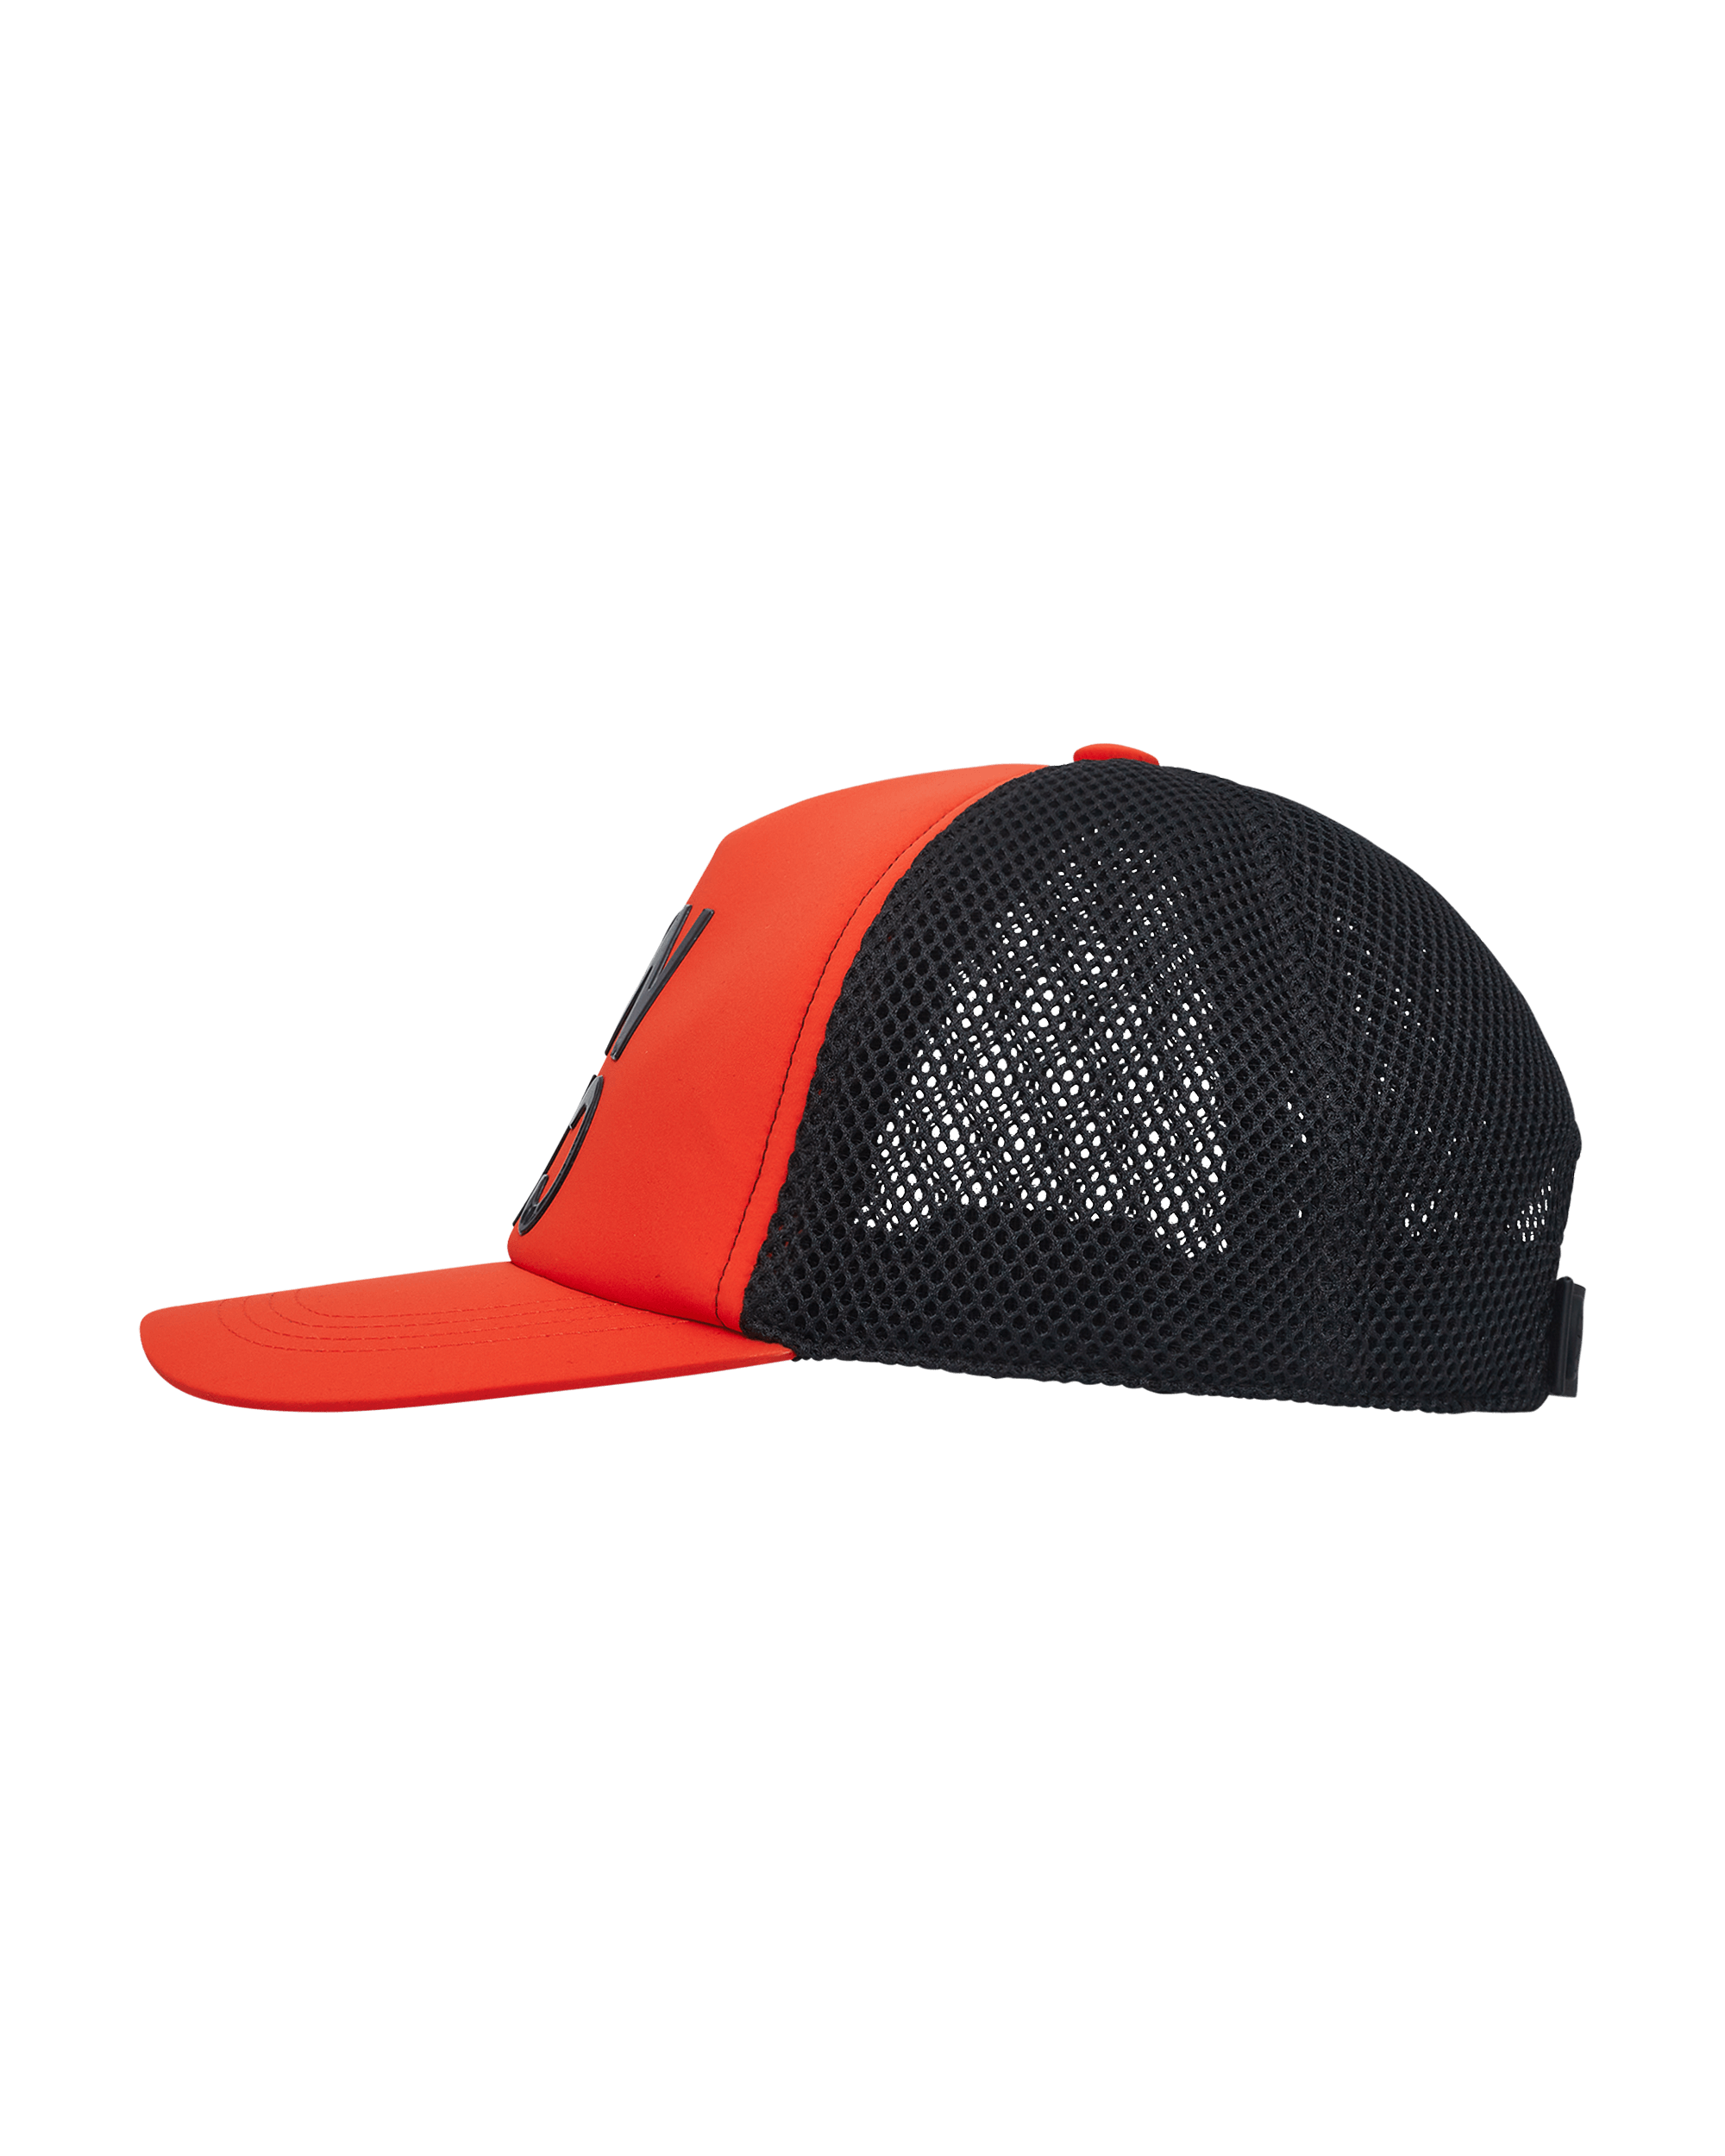 Moncler Genius Grenoble Day-Namic Man Baseball Cap Bright Orange Hats Caps G209Q3B00002 335